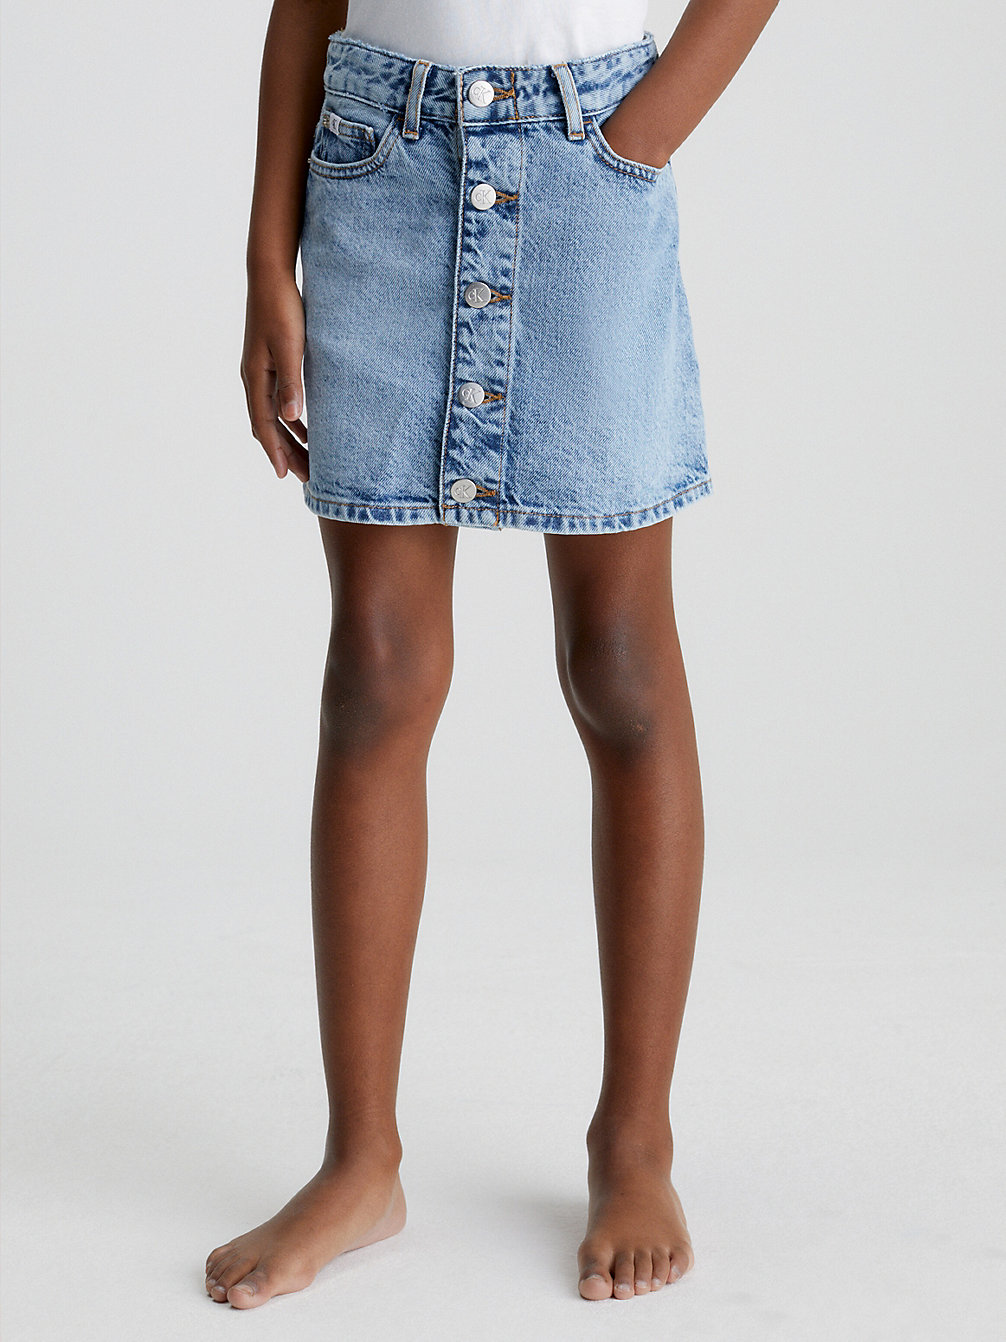 SALTPEPPERLIGHT Denim Skirt undefined girls Calvin Klein